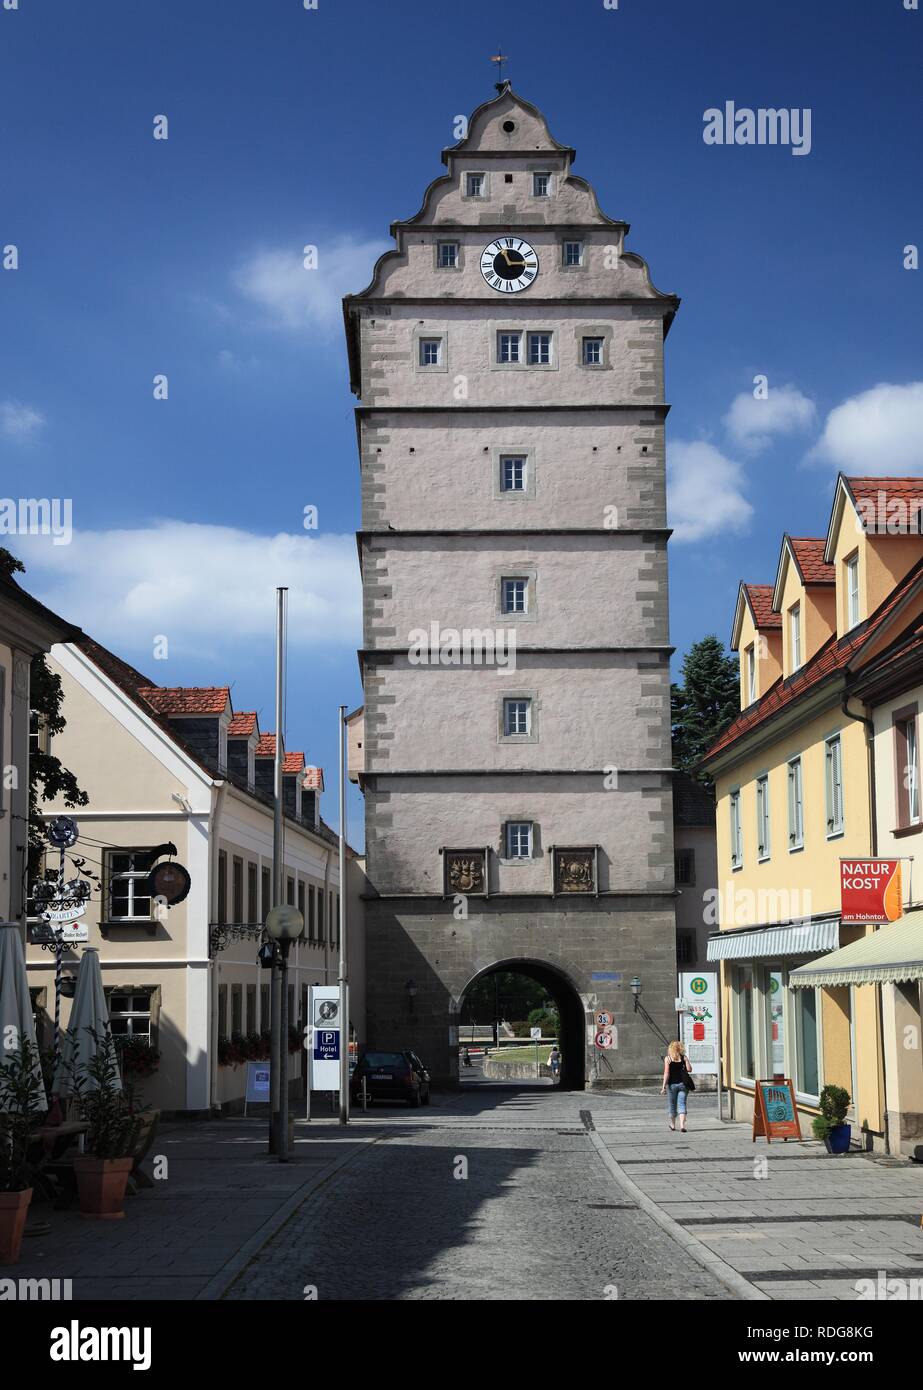 Hohntor gate tower, Bad Neustadt an der Saale, Landkreis Rhoen-Grabfeld district, Lower Franconia, Bavaria Stock Photo